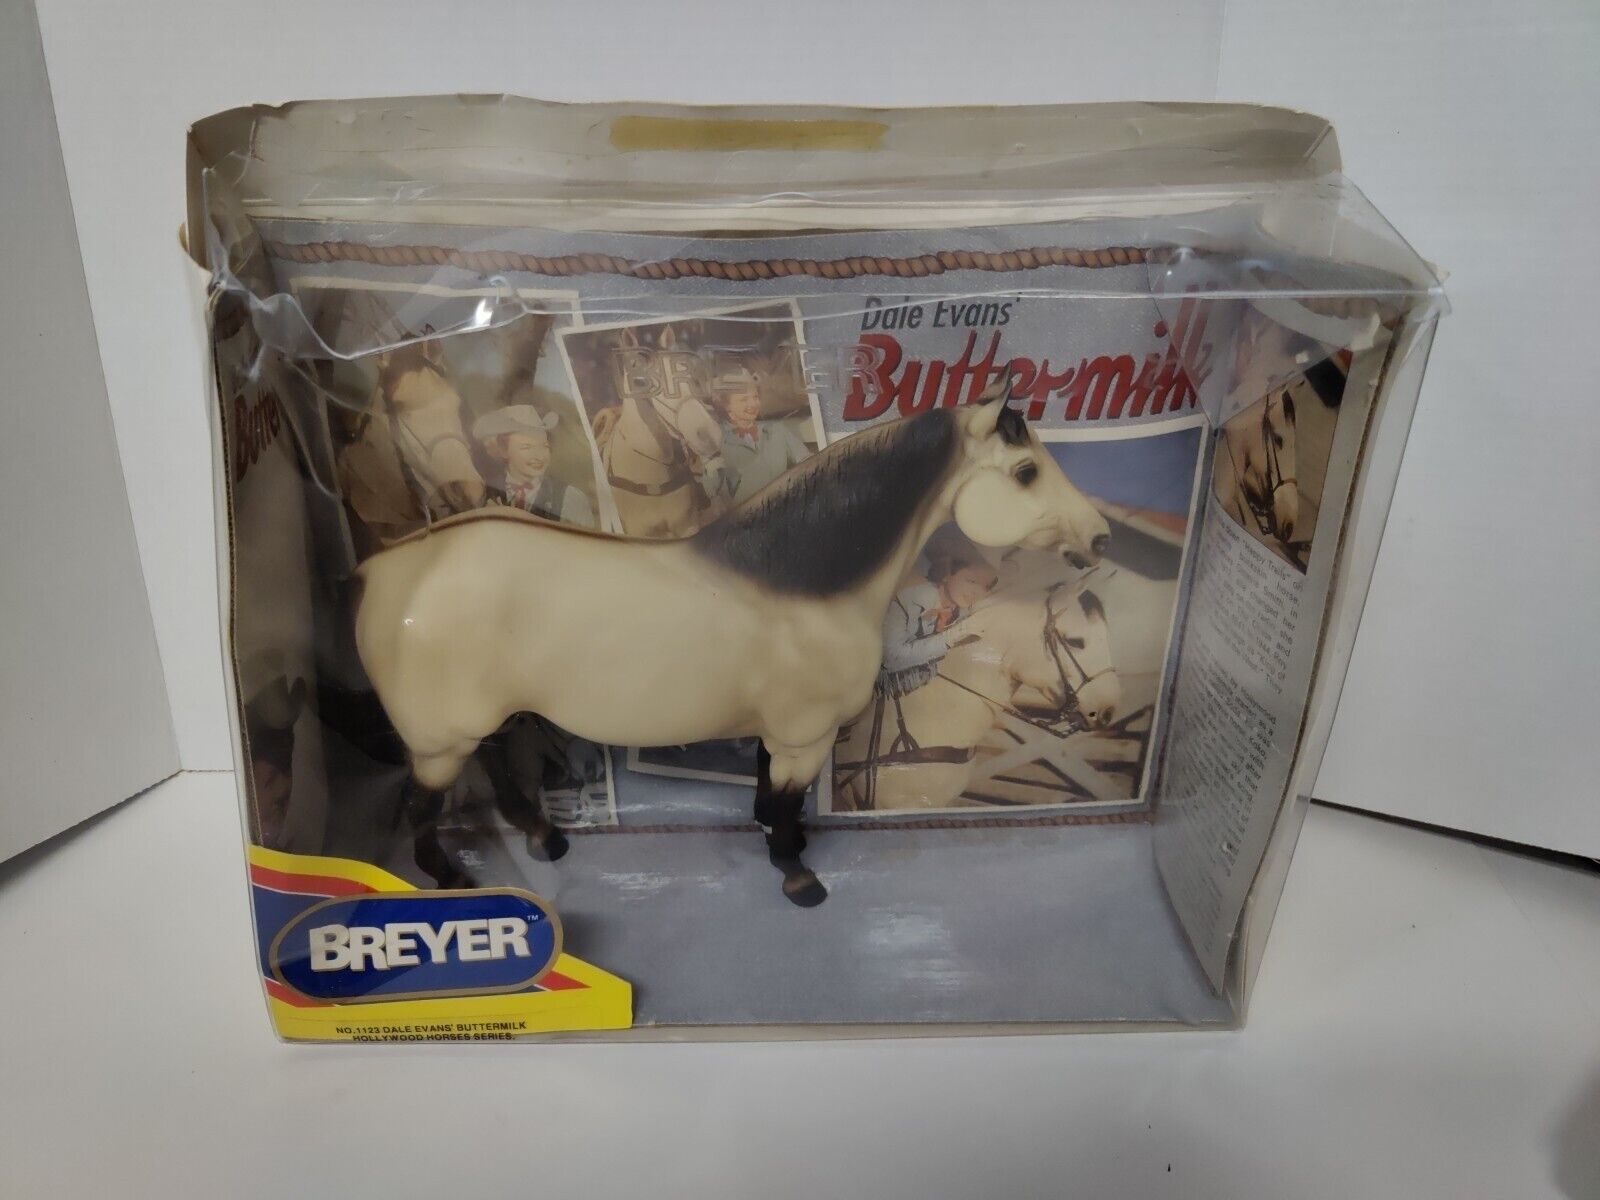 Breyer 1123 Dale Evans Buttermilk Hollywood Horses Series NIB Damaged Box No VHS